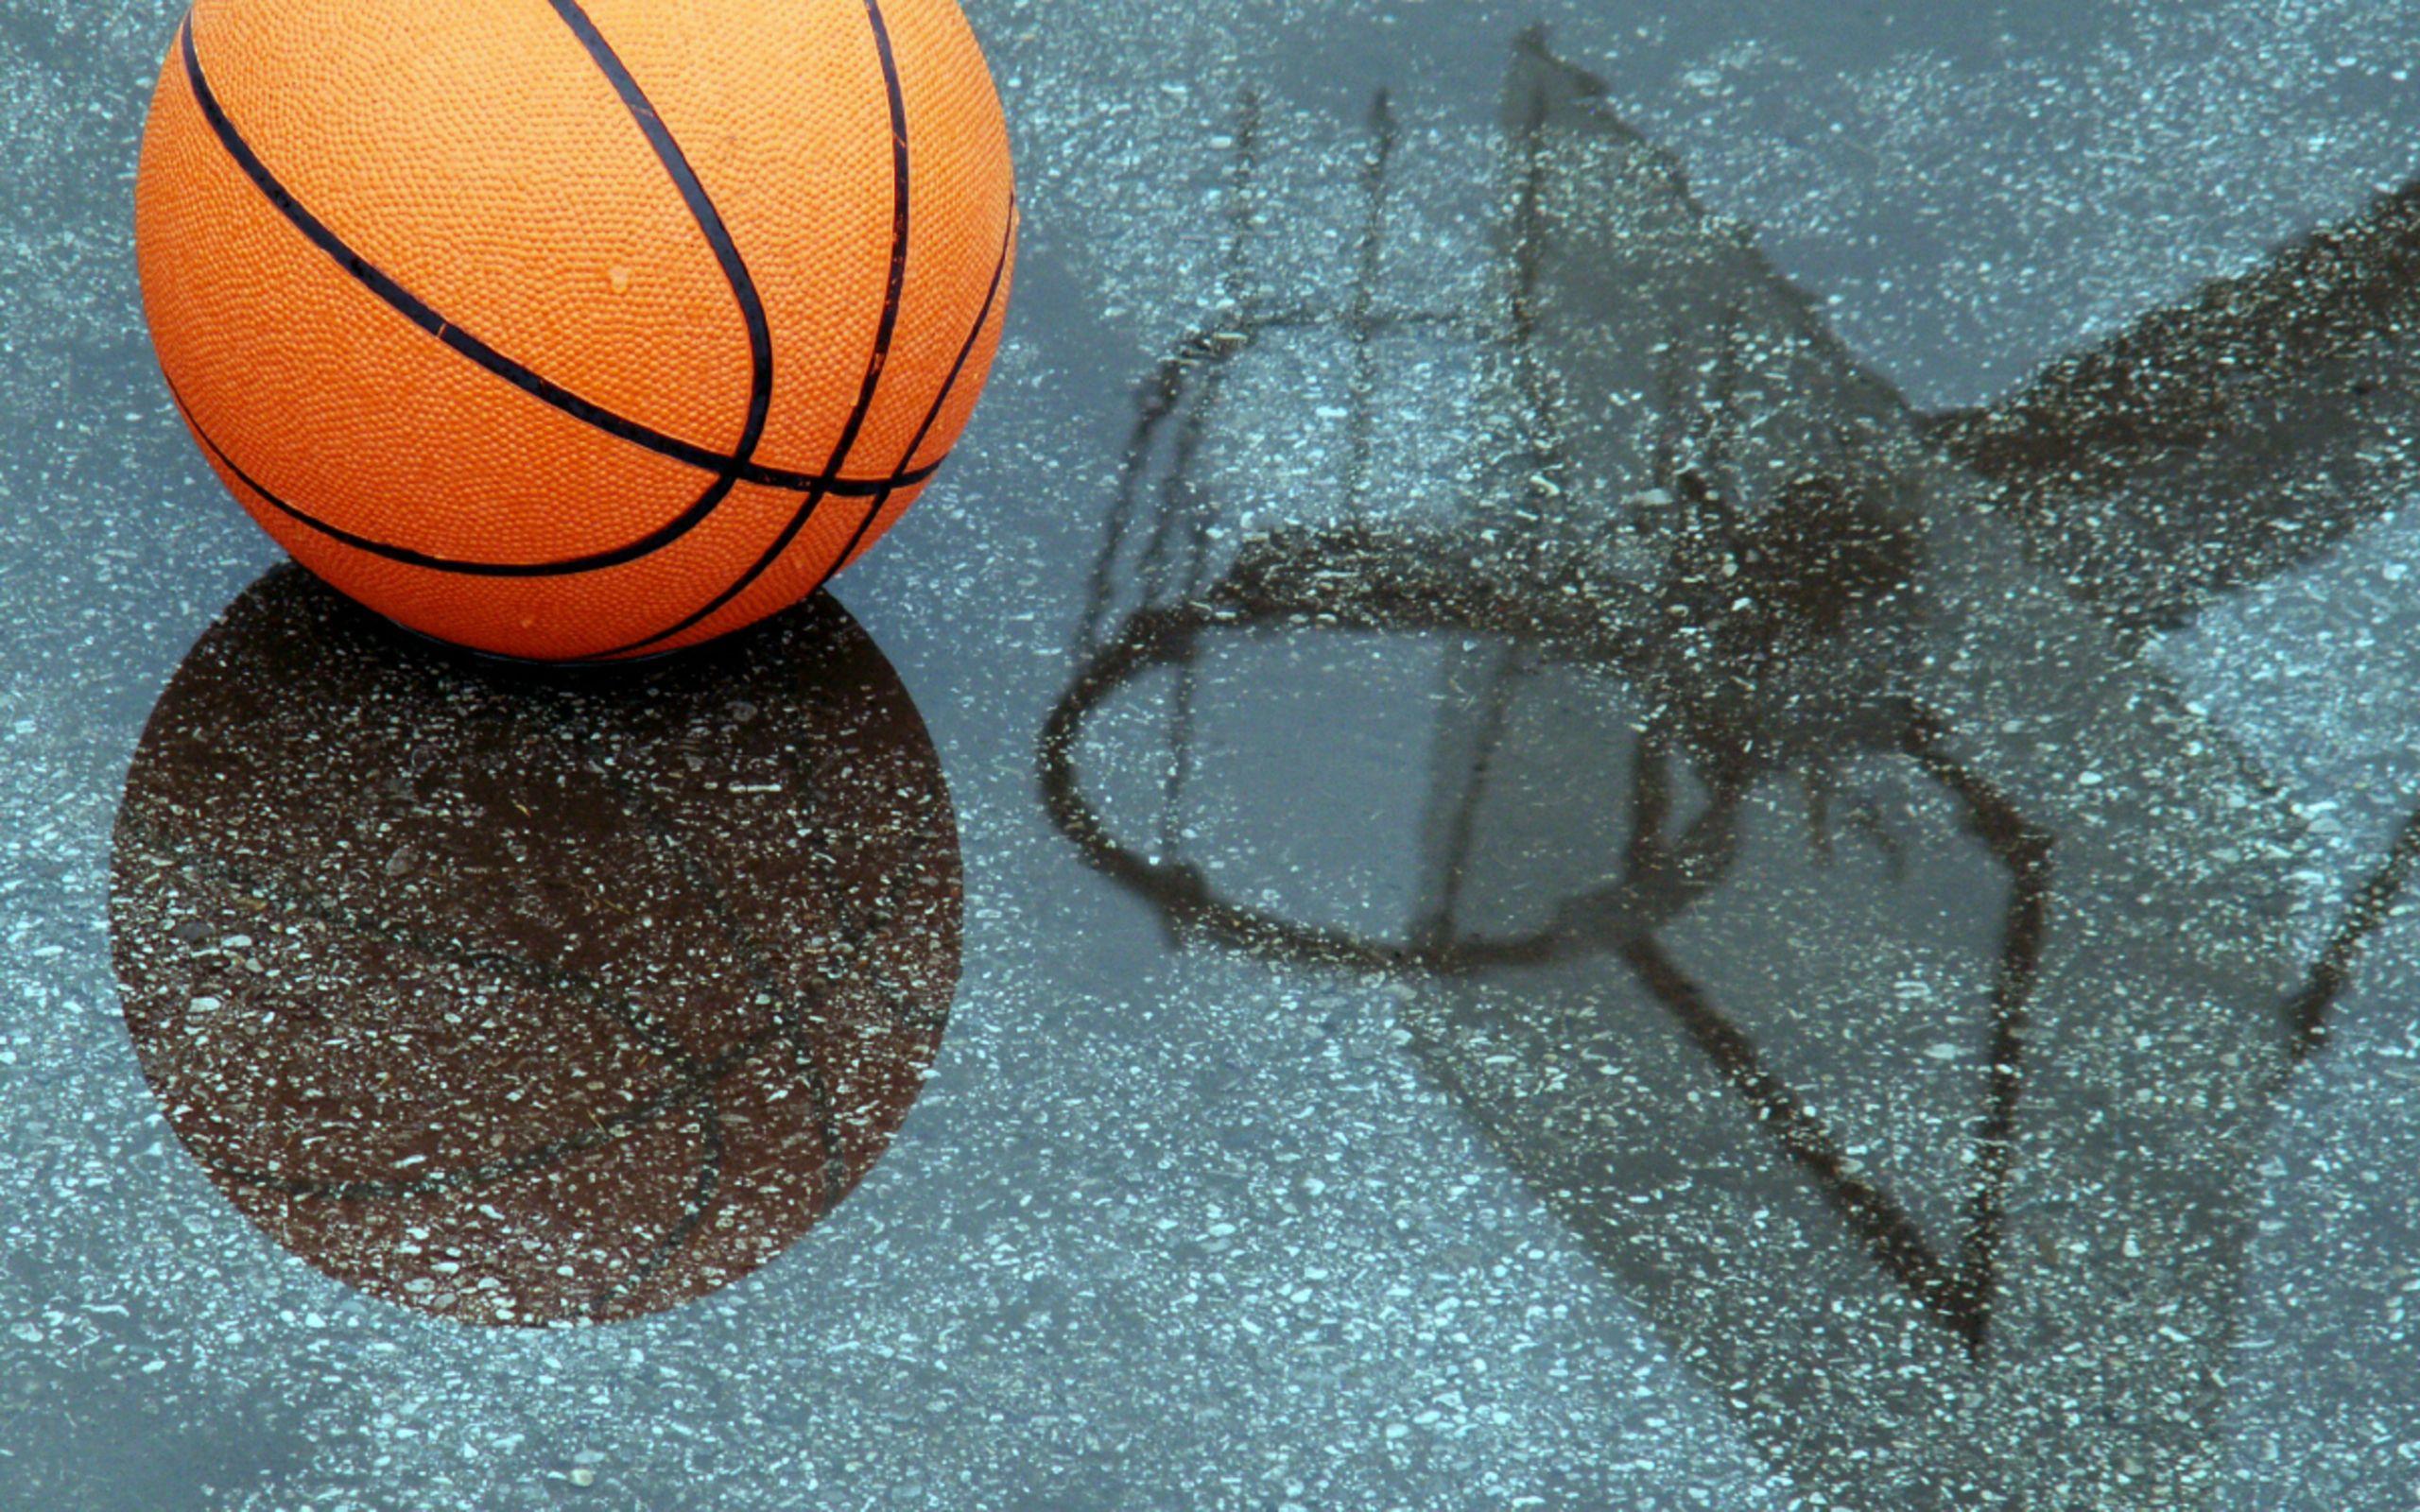 Basketball wallpaper